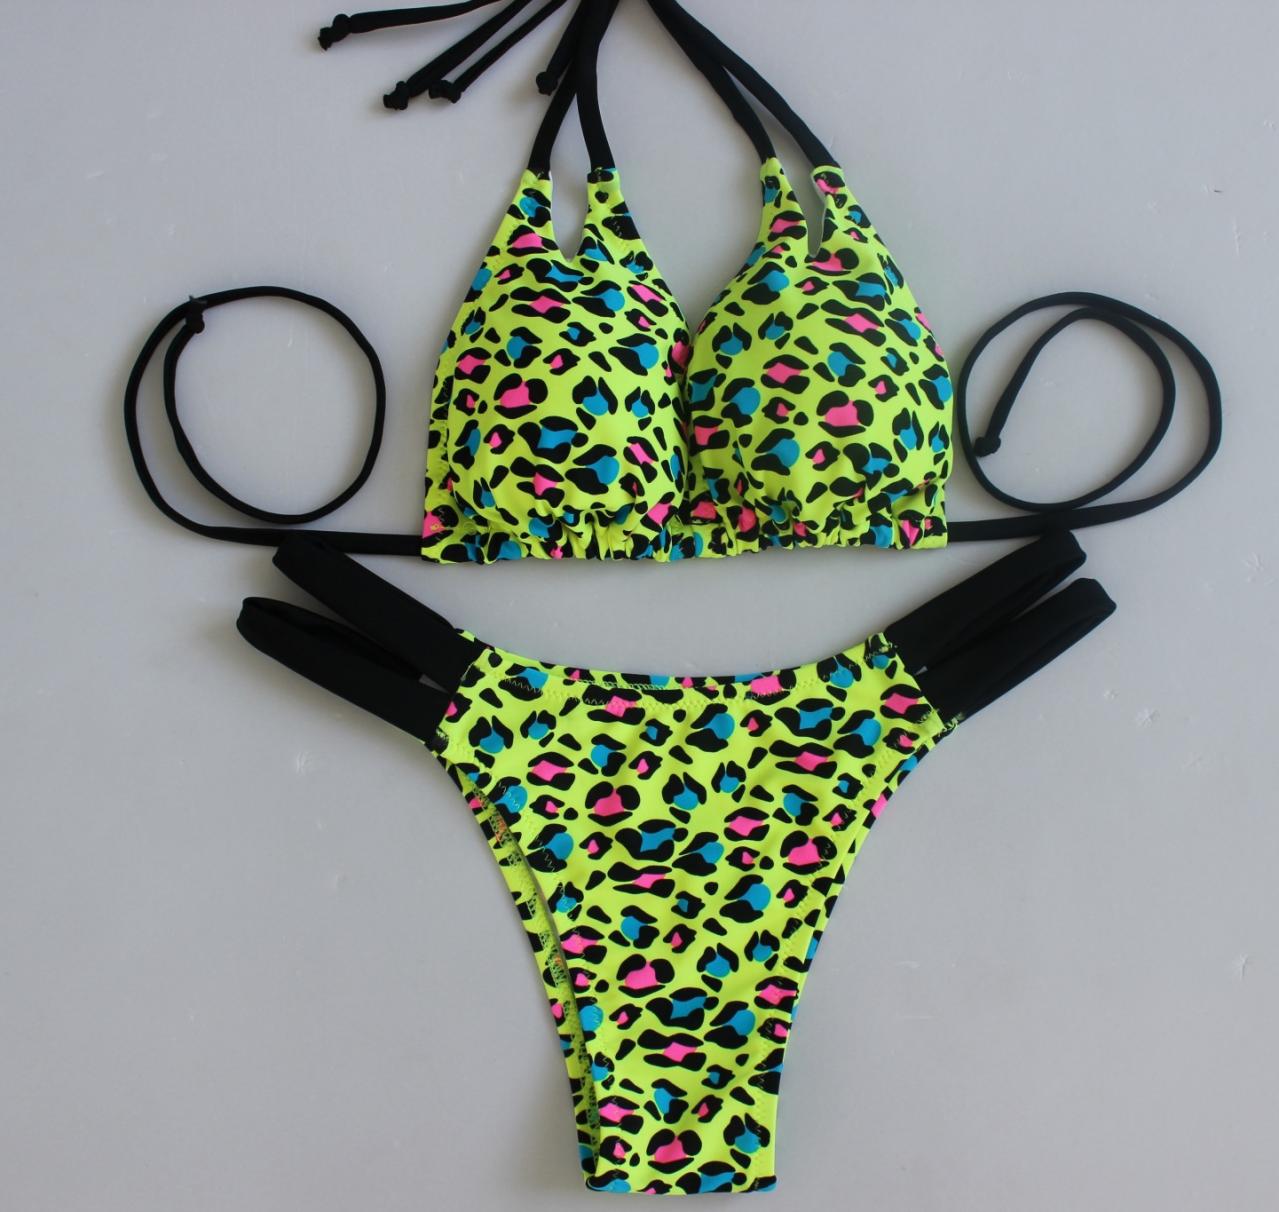 Sexy Summer Swimsuit Swimwear Bikini - Yellow